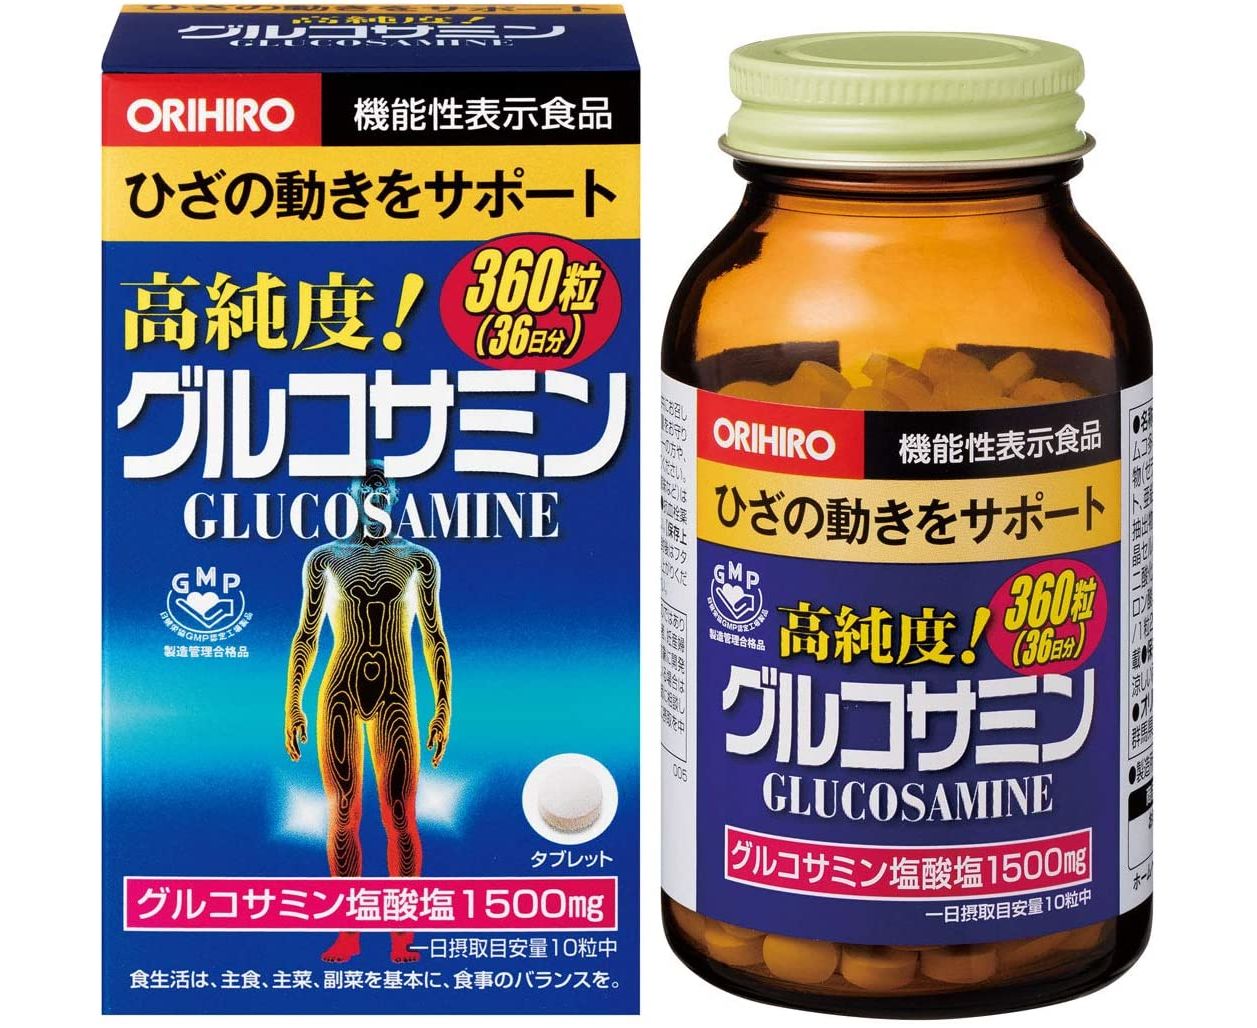 Купить таблетки хондроитин для суставов. Orihiro Glucosamine 1500. Глюкозамин Orihiro 360 штук. Орихиро глюкозамин и хондроитин. Японские Orihiro глюкозамин 360.